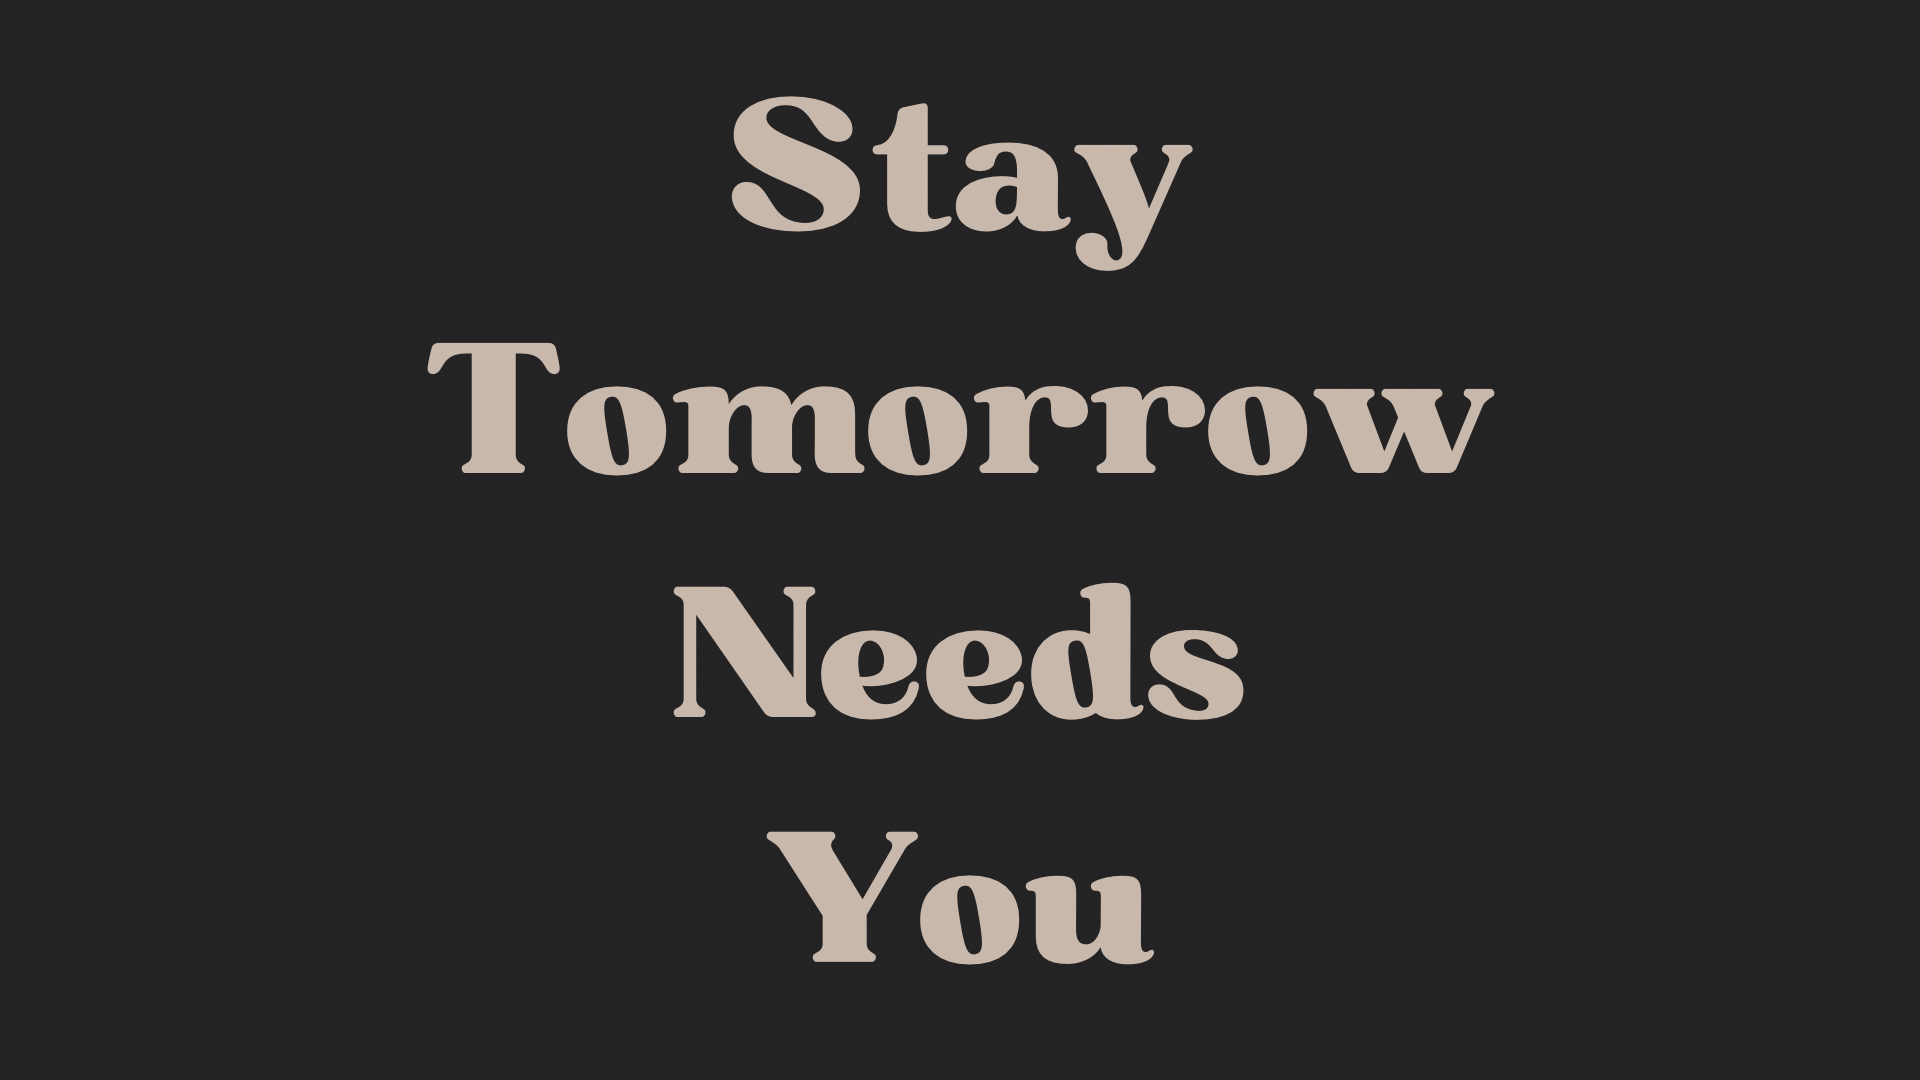 Stay Tomorrow Needs You